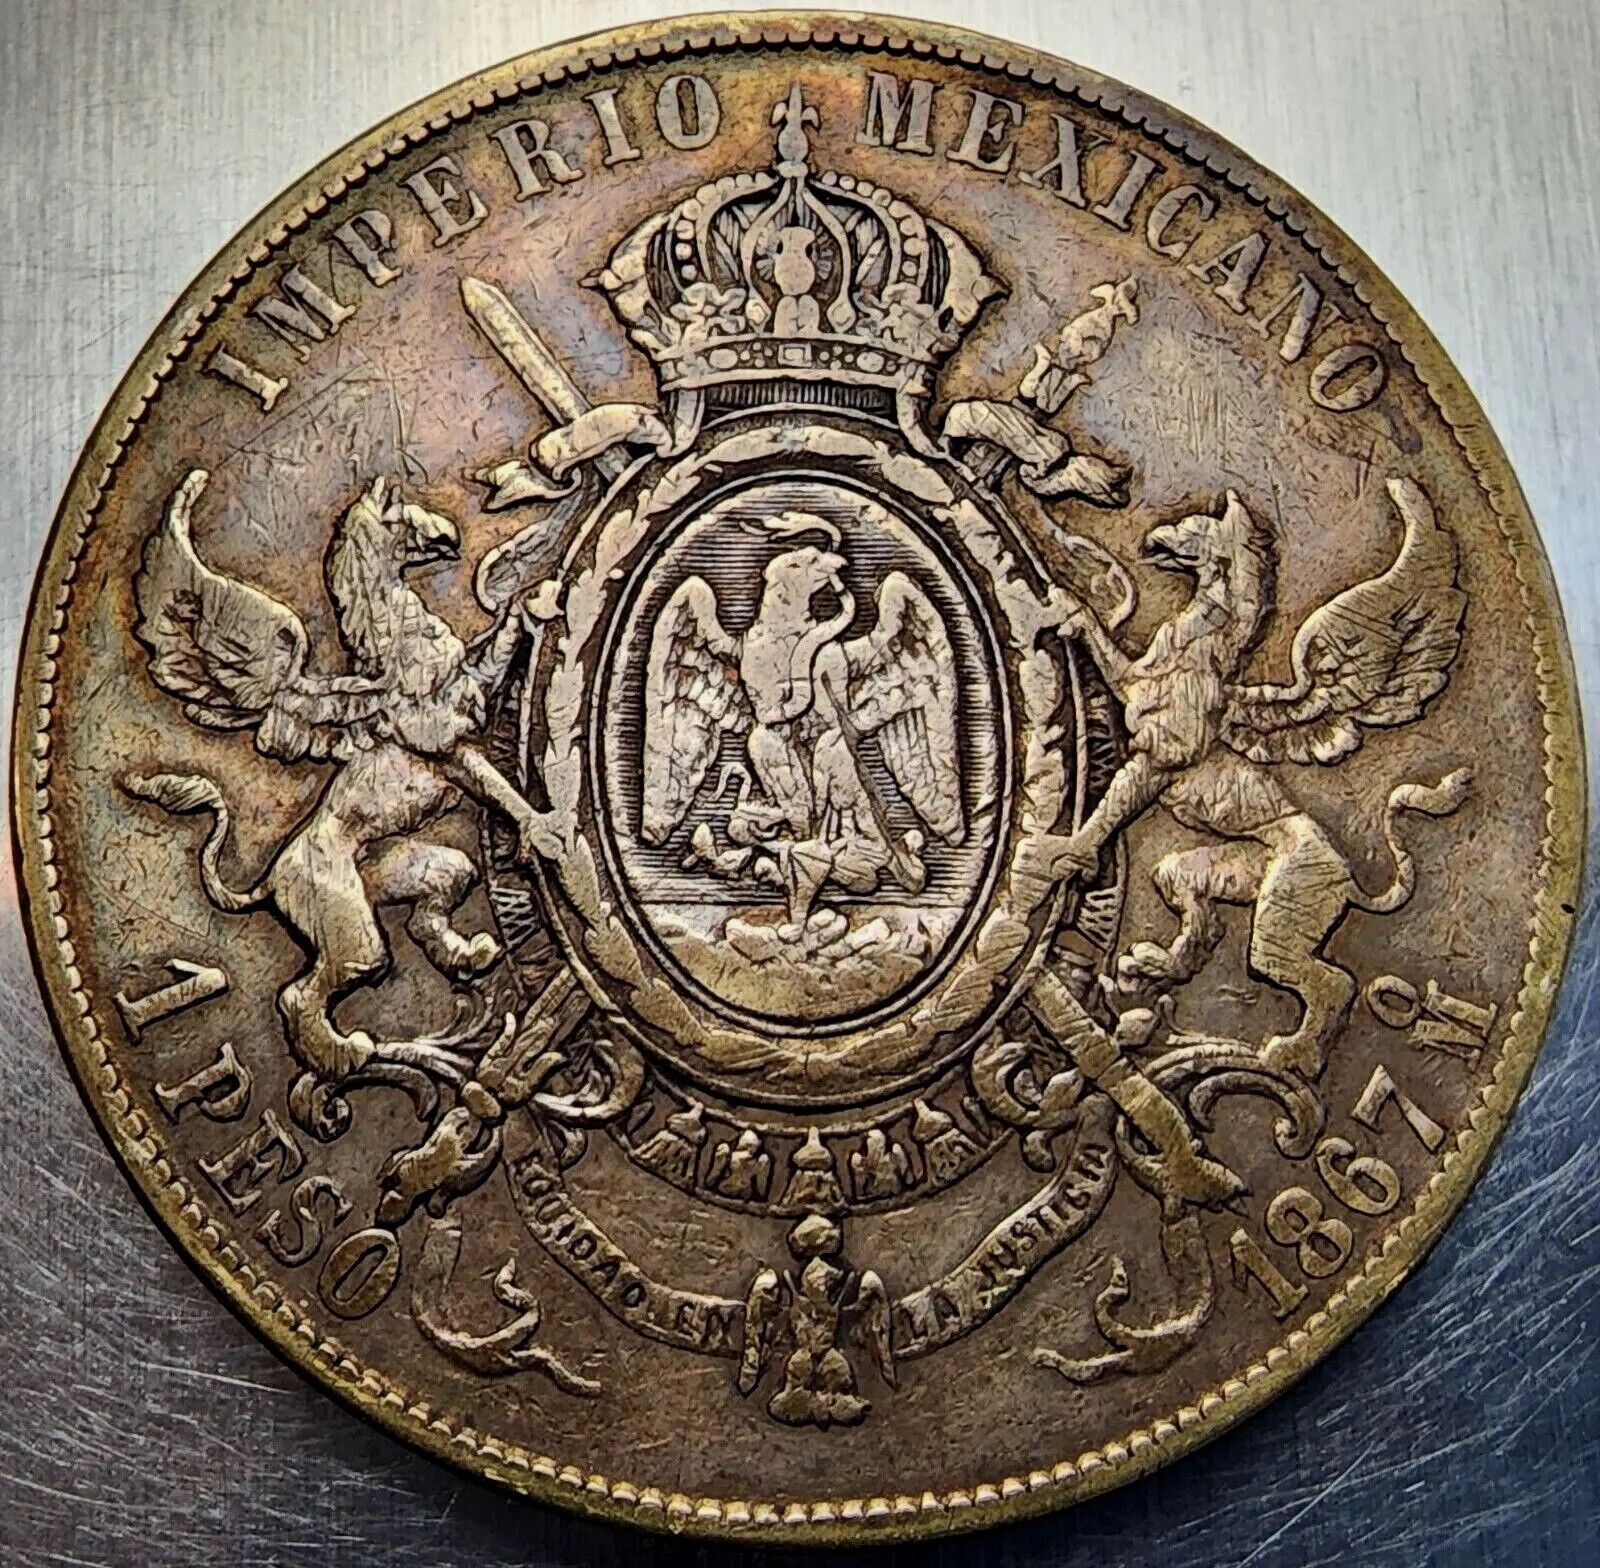 1 Peso 1867 Mo Maximiliano Emperador Flanked By Griffons Mexico Very Rare Date!!